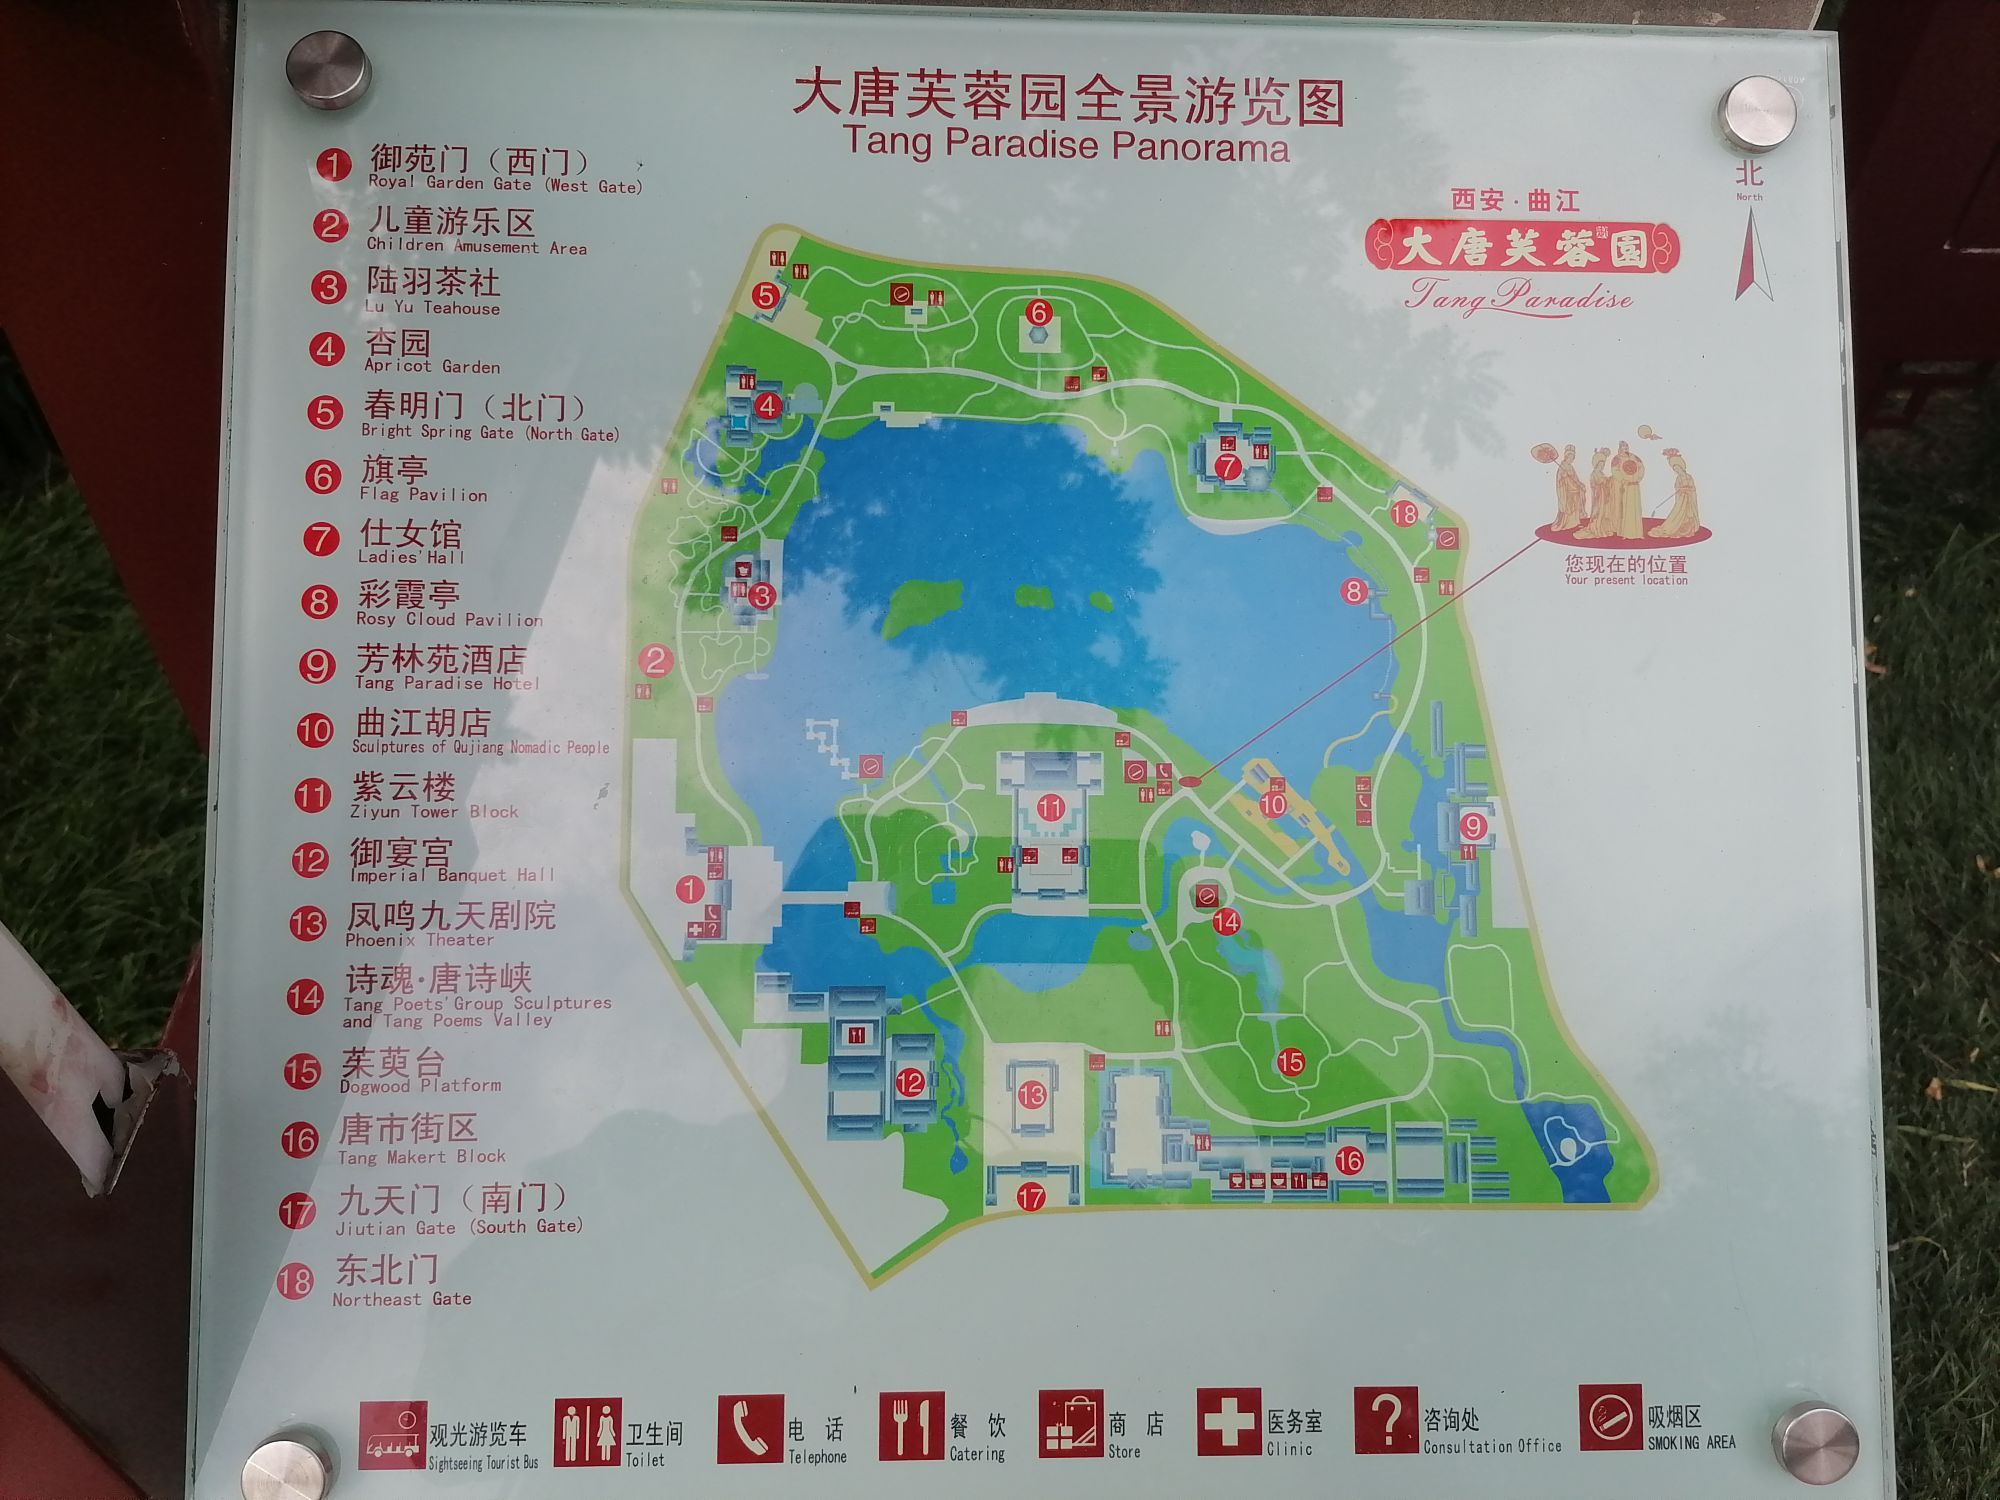 Xi'an Tang Dynasty Furong Garden tourist map